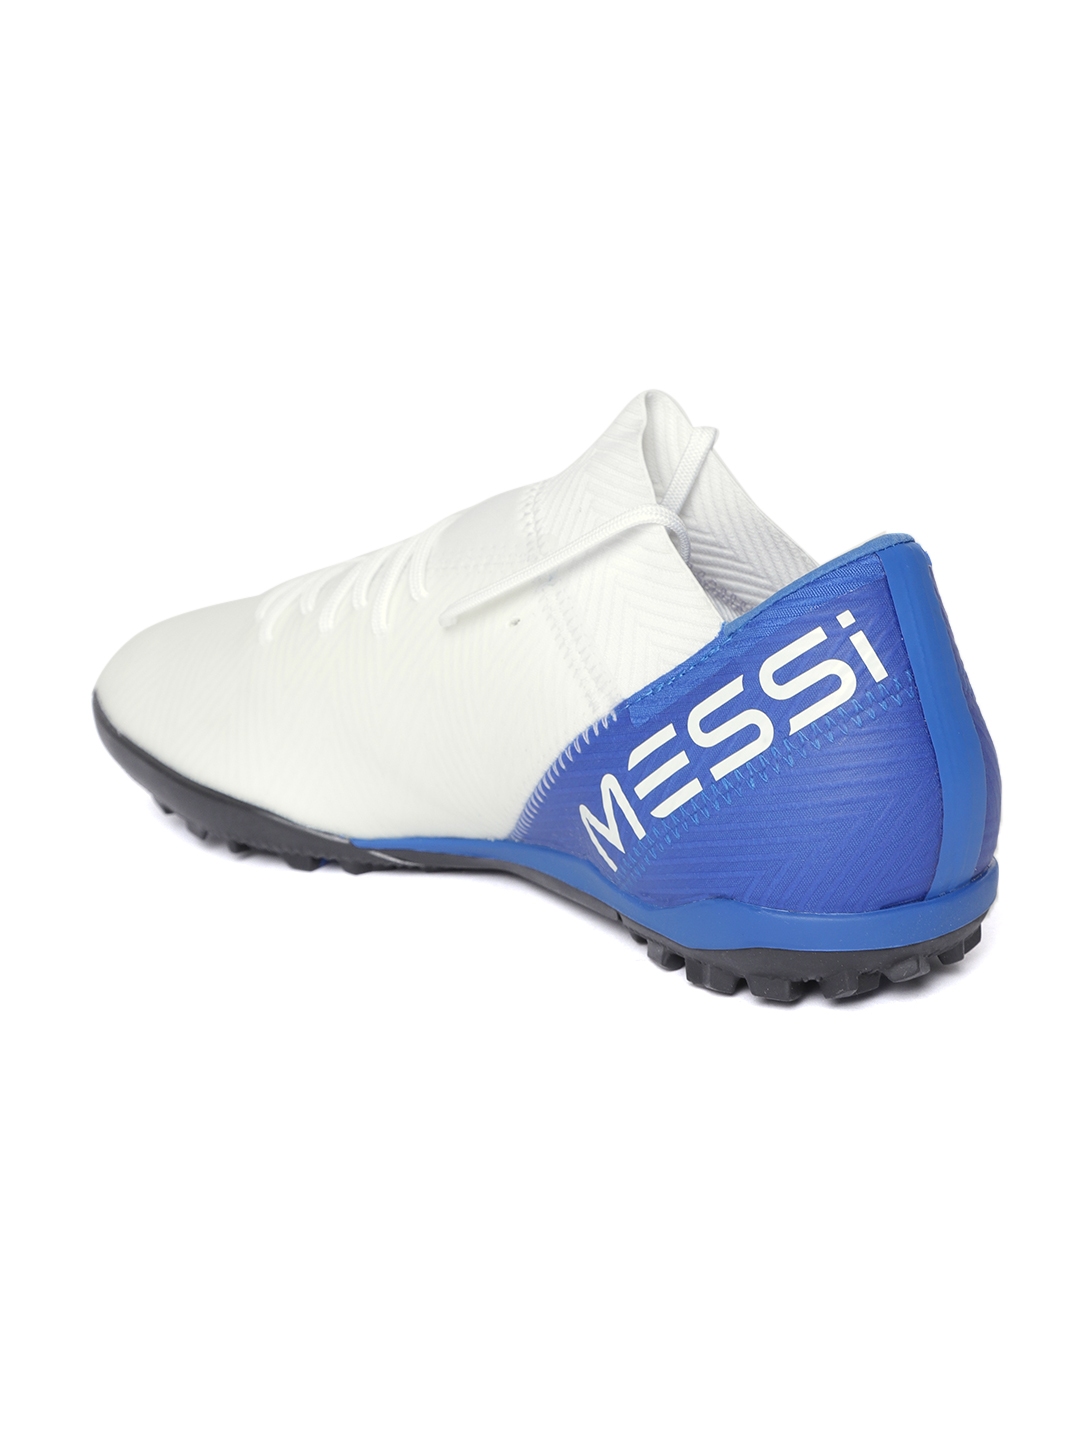 messi blue shoes hot 9894a 92f47